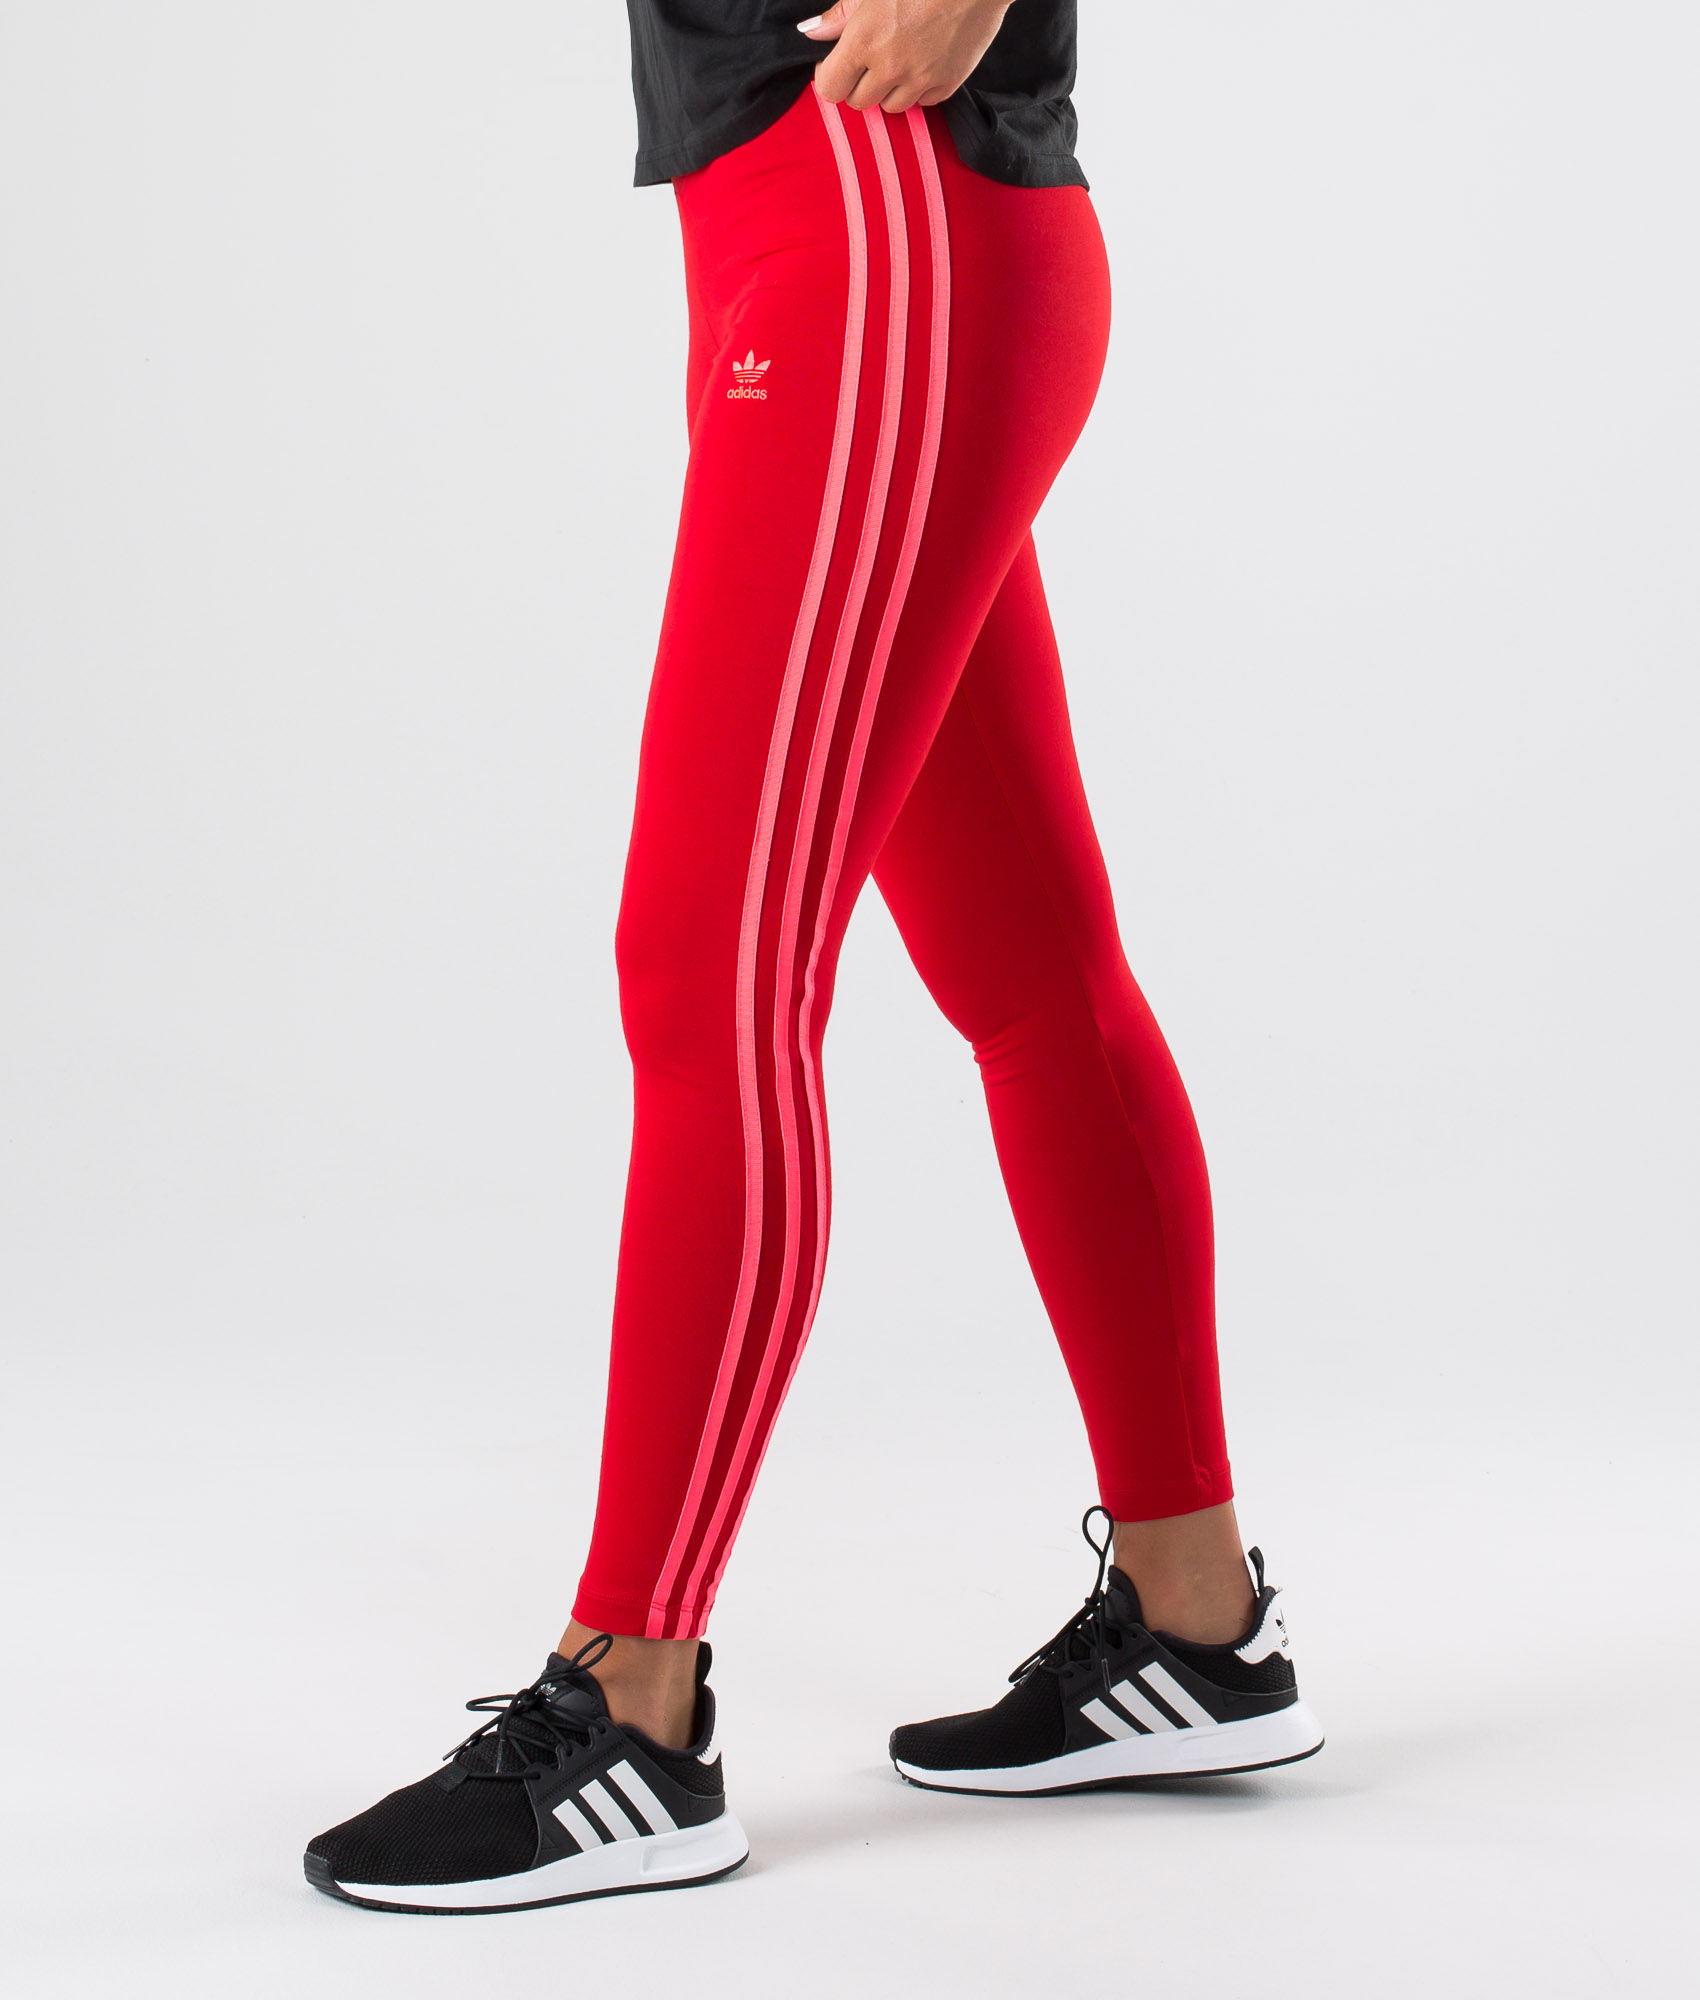 Adidas Originals 3-Stripes Leggings Scarlet - Ridestore.com